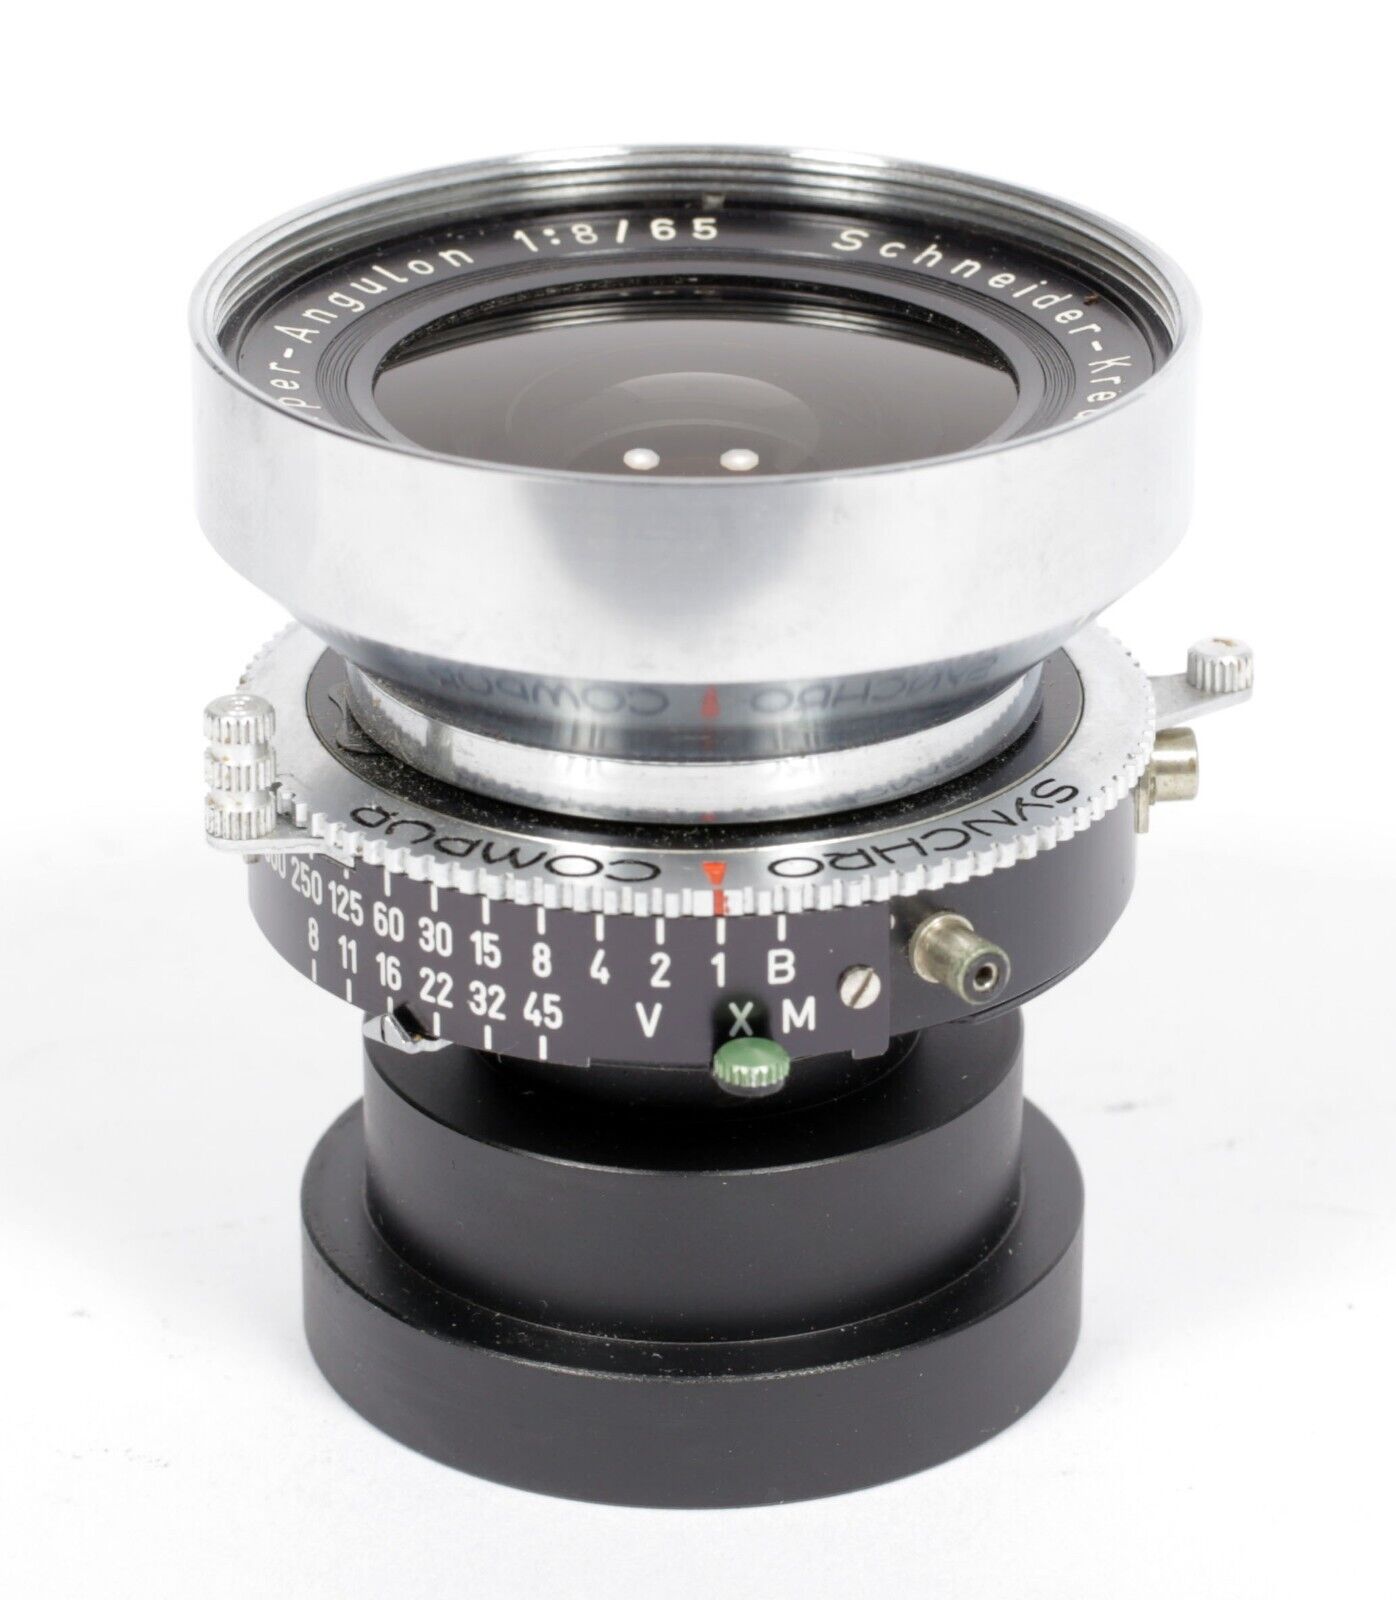 Schneider Super Angulon 65mm F8 lens in Compur #00 (#160) | CatLABS